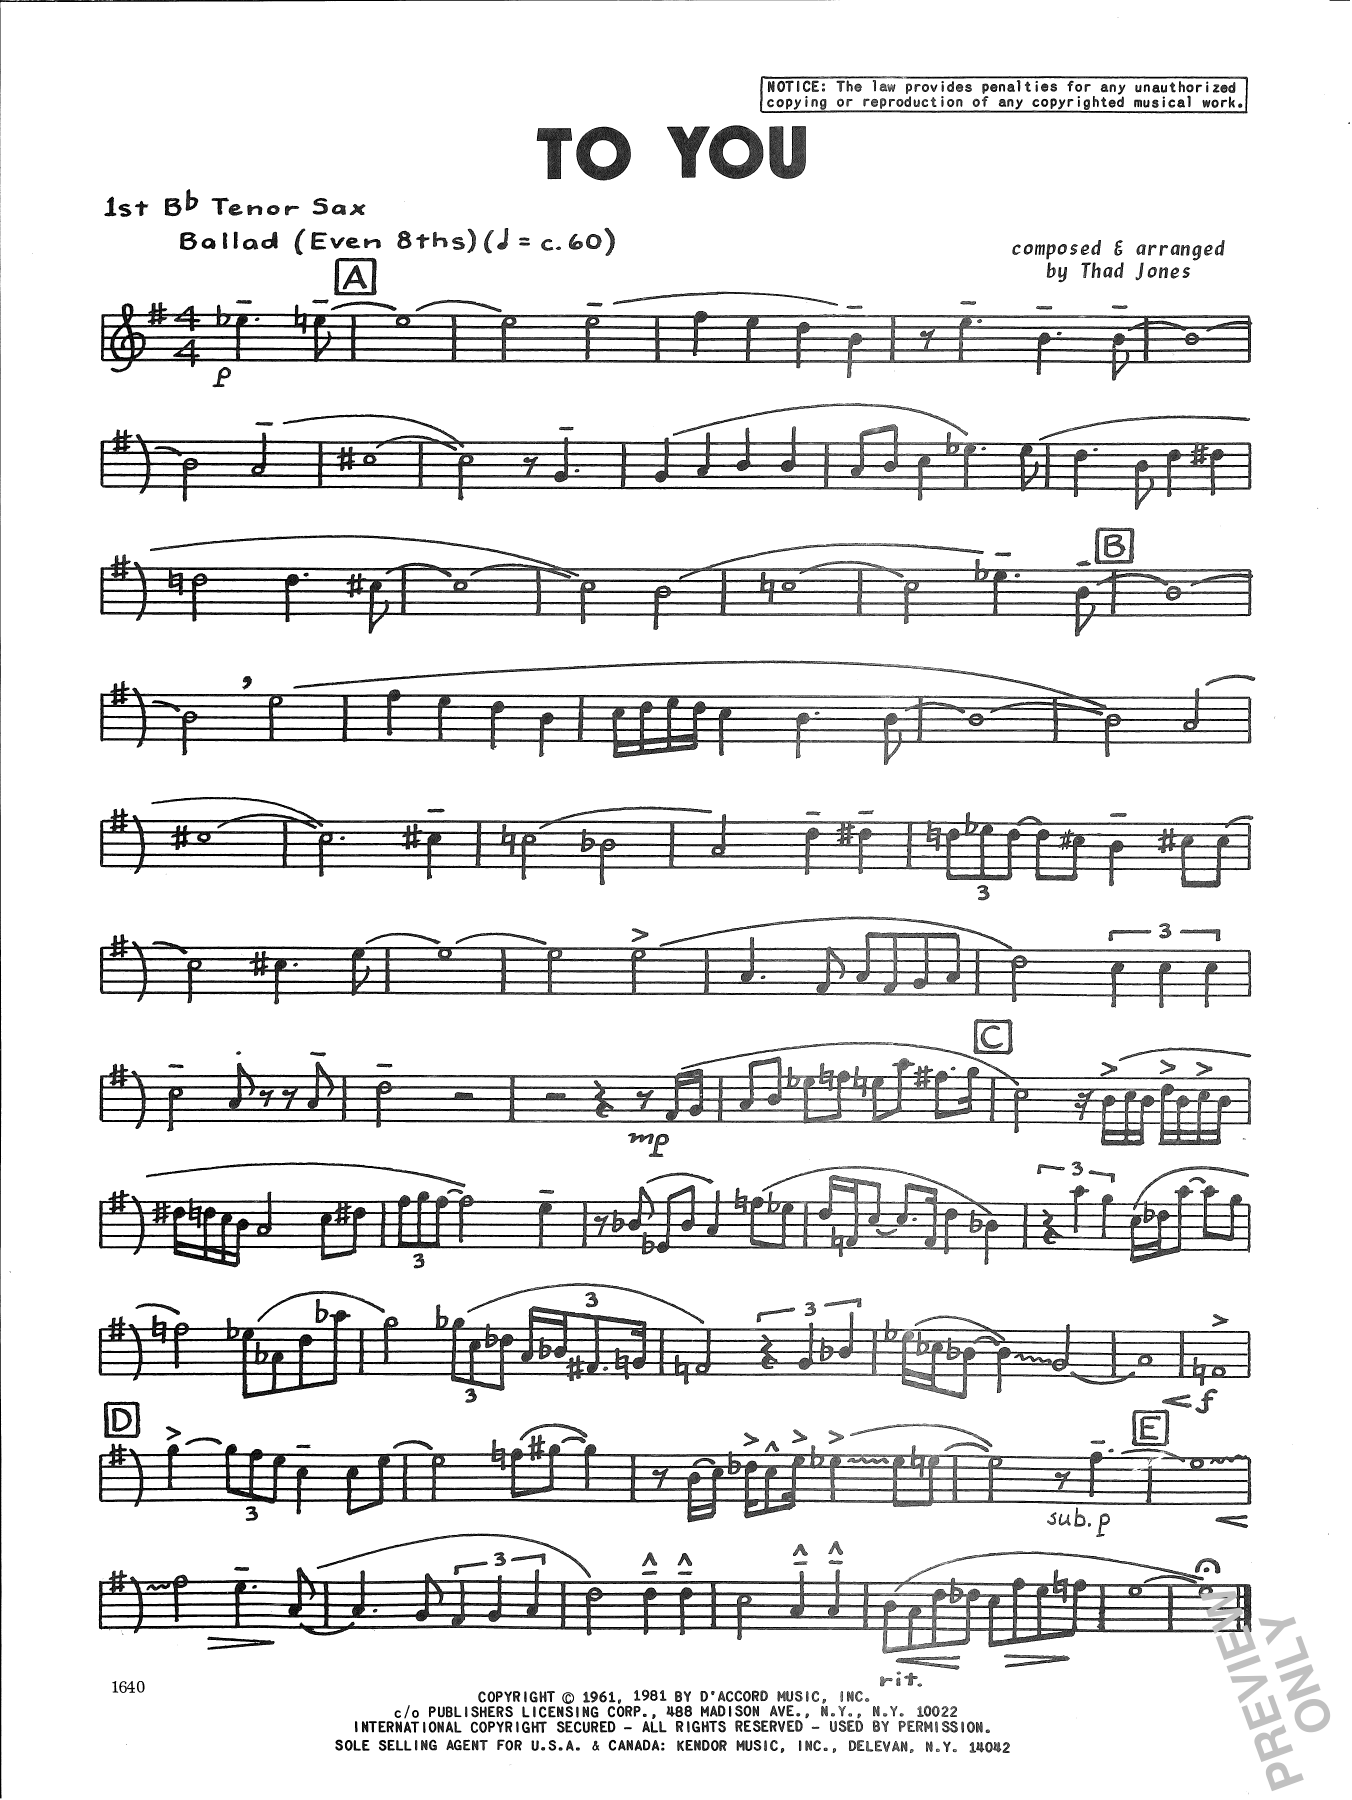 Download Thad Jones To You - 1st Tenor Saxophone Sheet Music